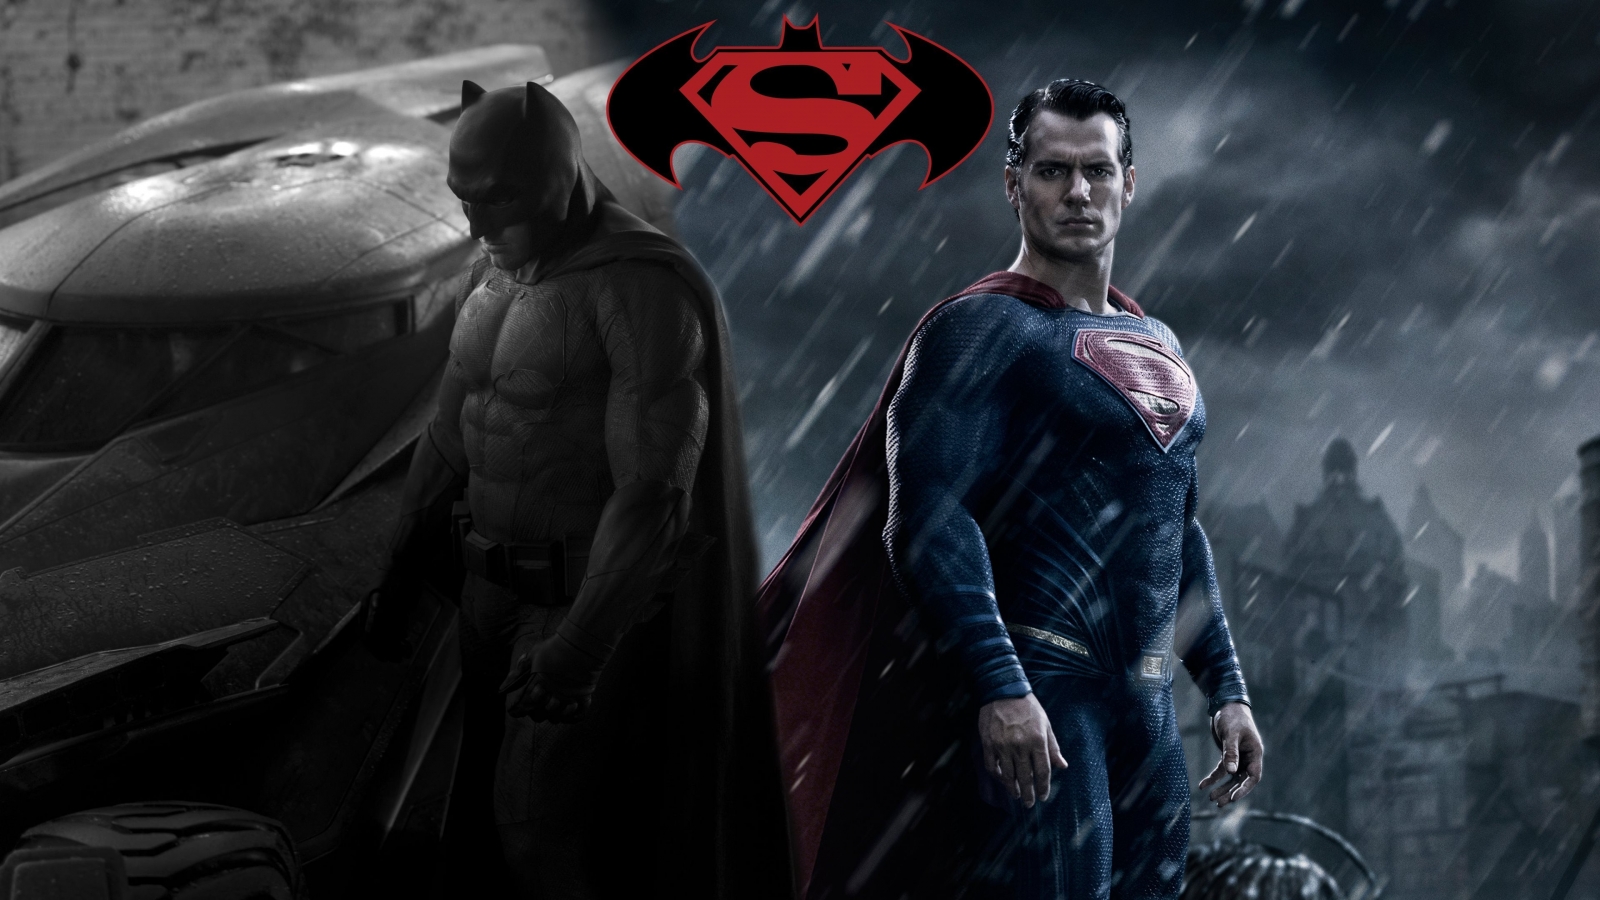 Batman vs Superman Fan Art for 1600 x 900 HDTV resolution